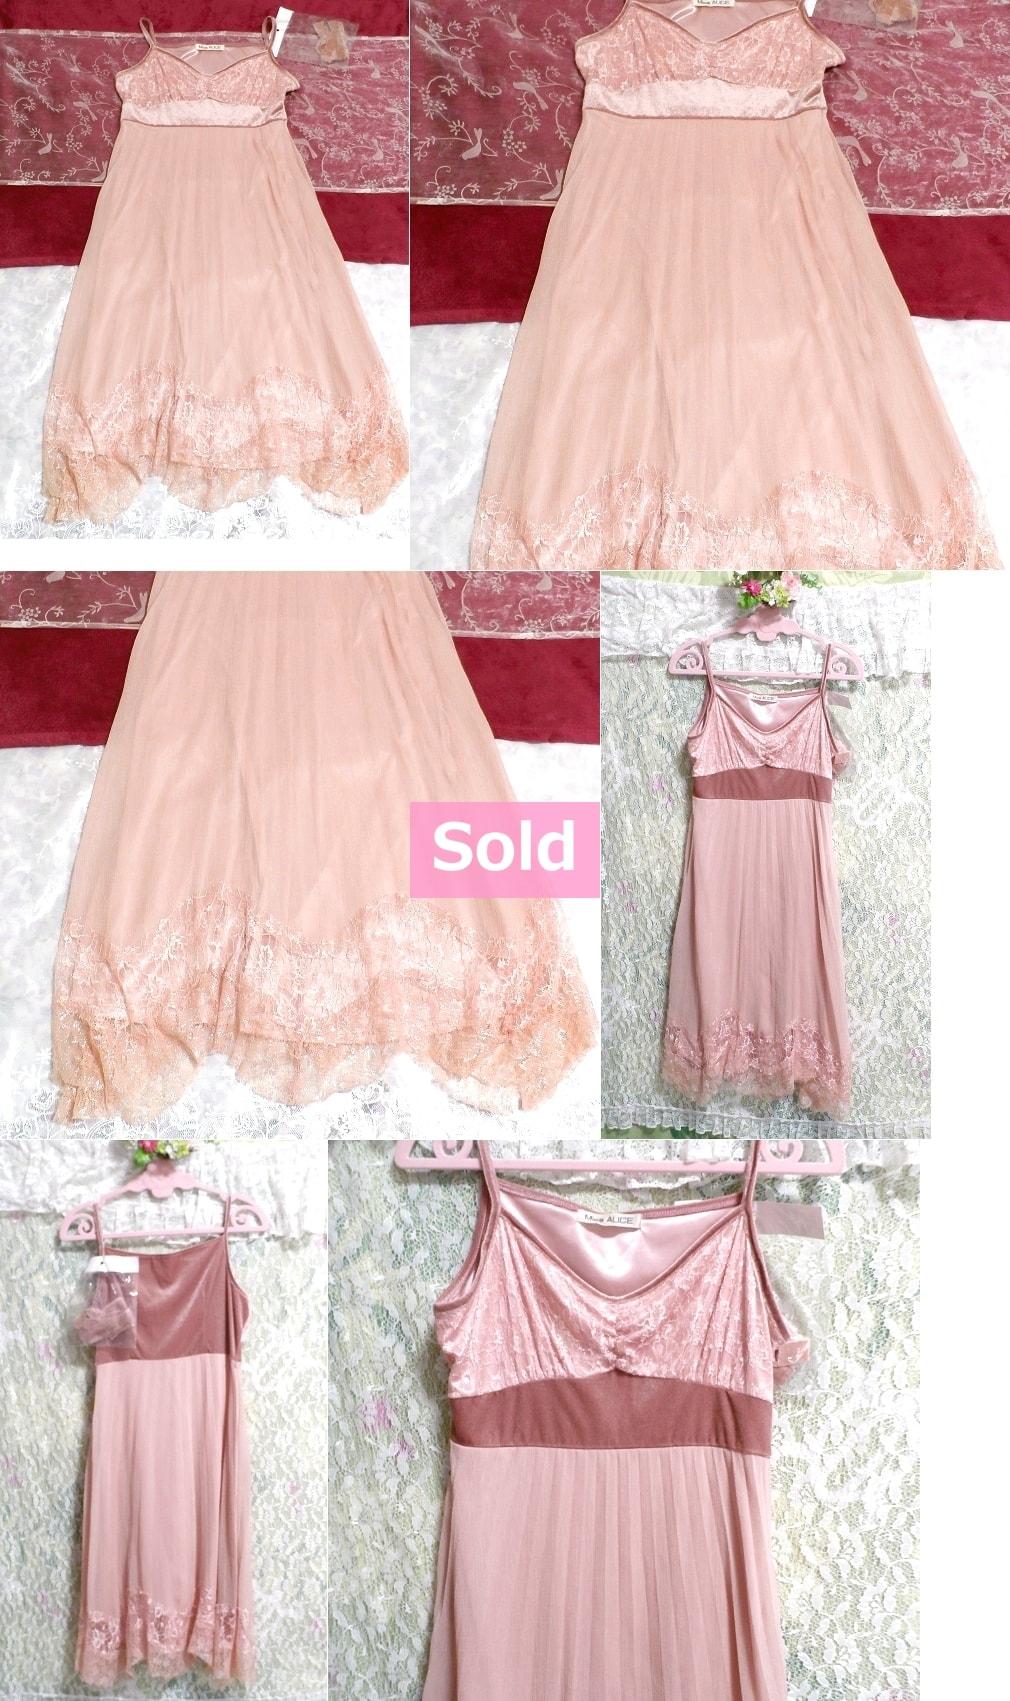 Pink chiffon lace camisole one piece / negligee